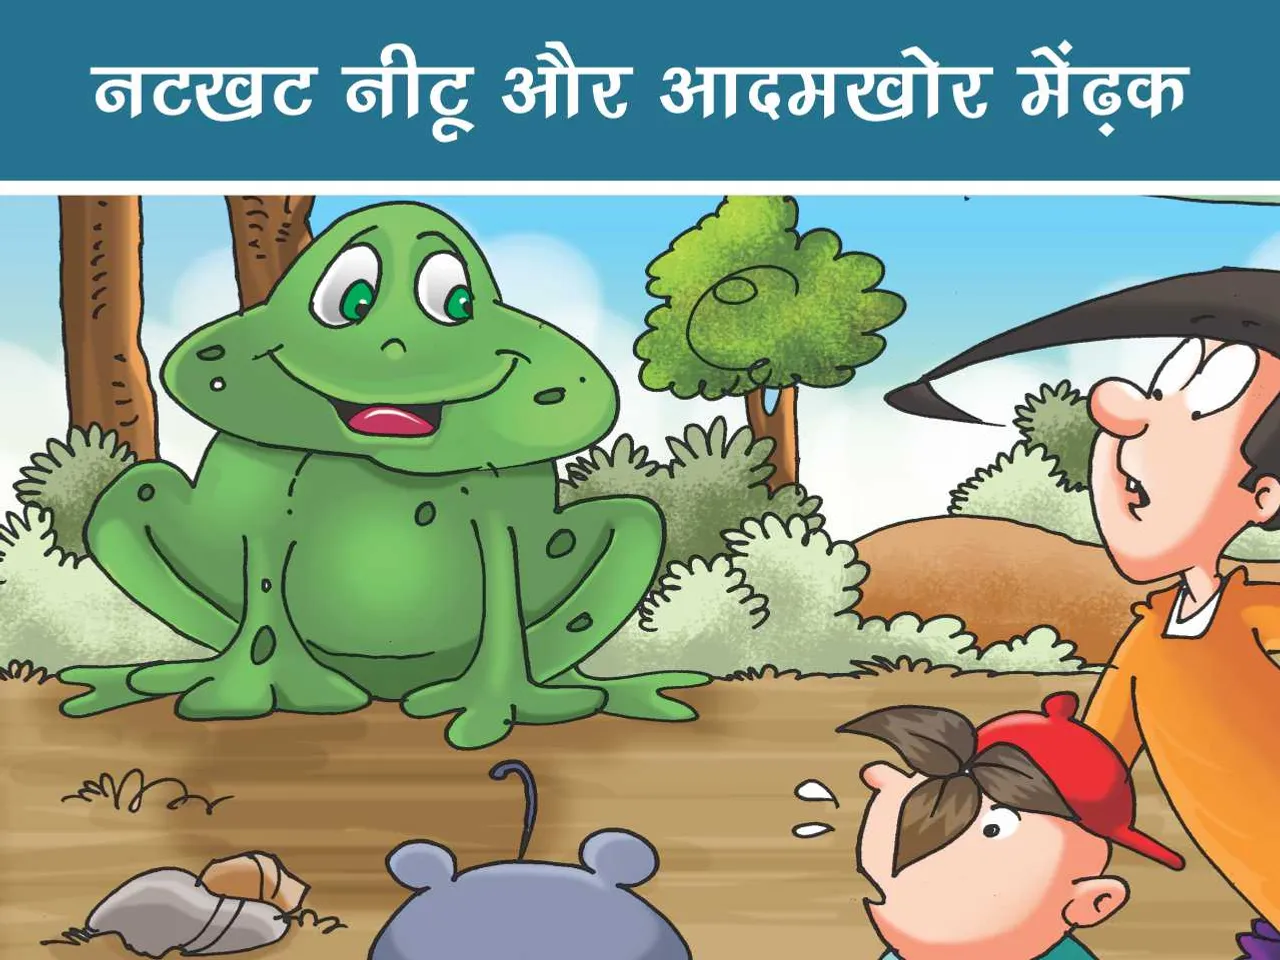 Lotpot e-comics cartoon character natkhat neetu 